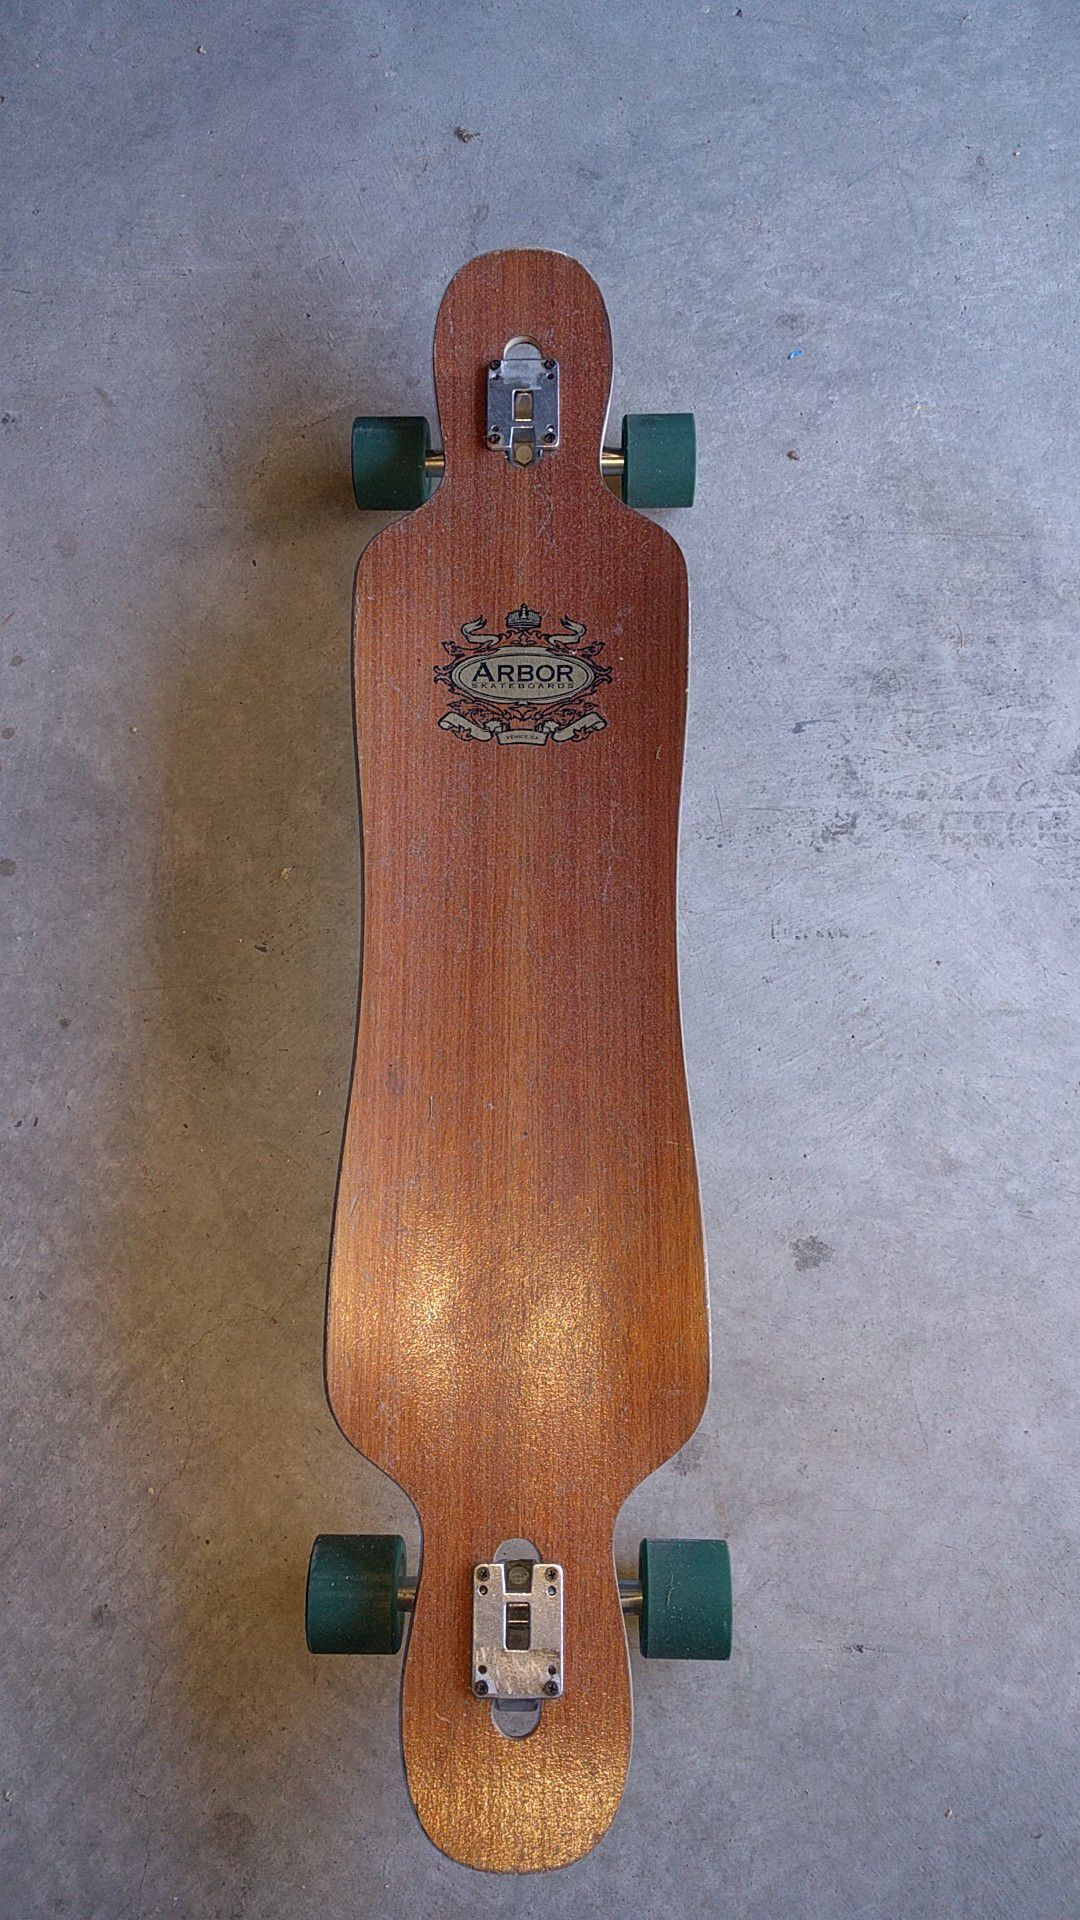 Arbor Genesis 44" Complete Longboard Skateboard with Gullwing trucks and Mercer Wheels